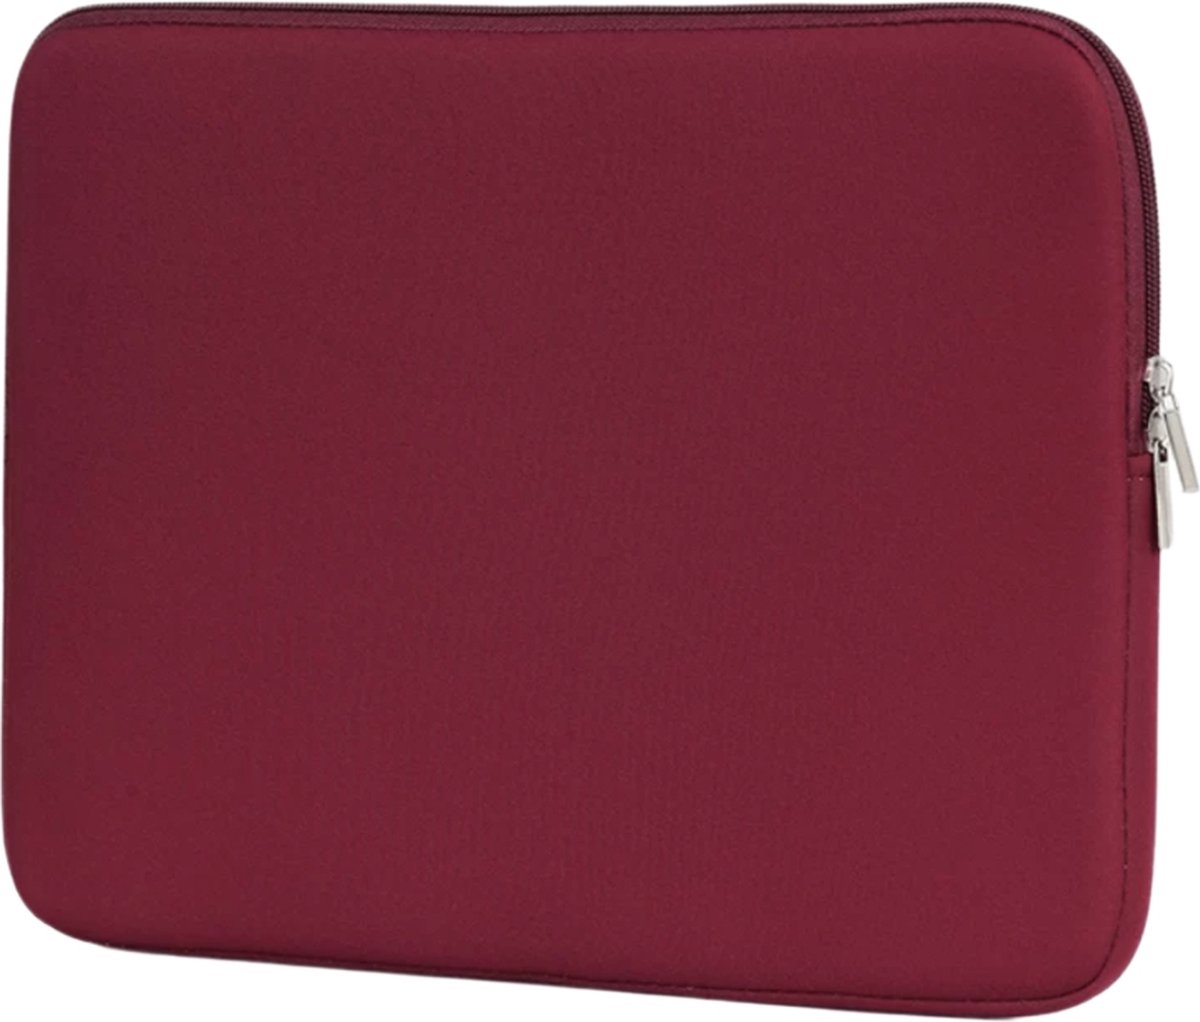 Laptopcase – sleeve – spatwaterdicht – 15,6 inch – laptoptas – bordeaux rood - Soft Touch